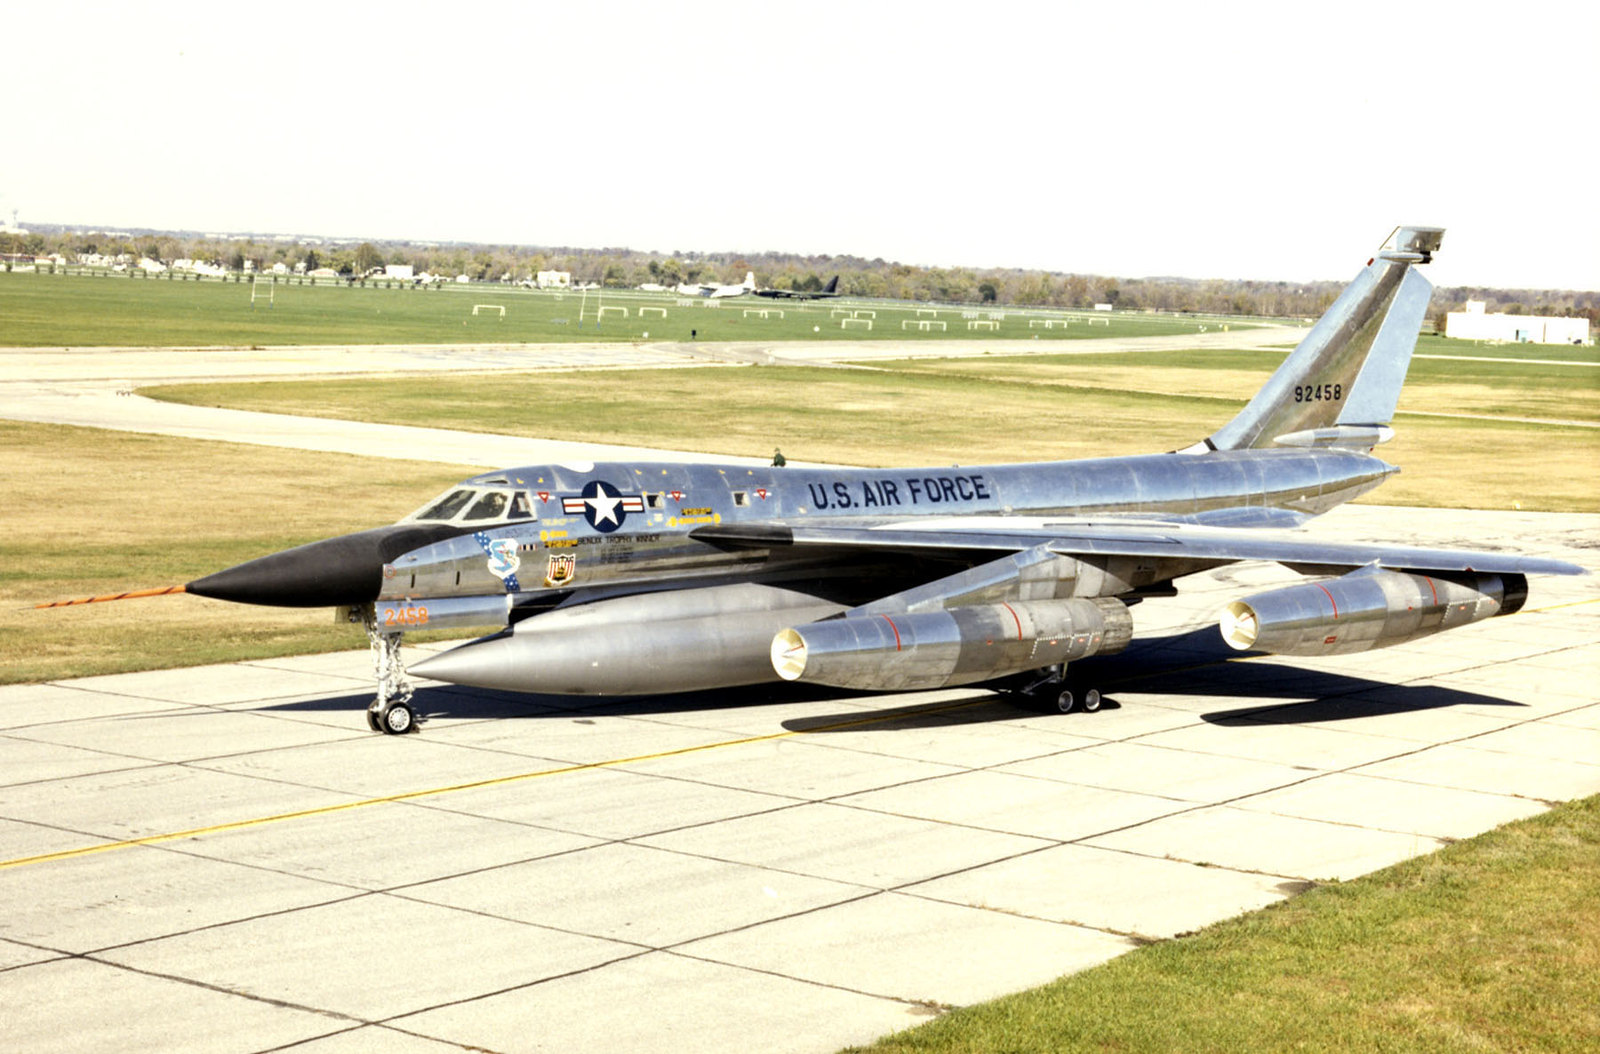 The B-58 Hustler was capable of high speed flight.